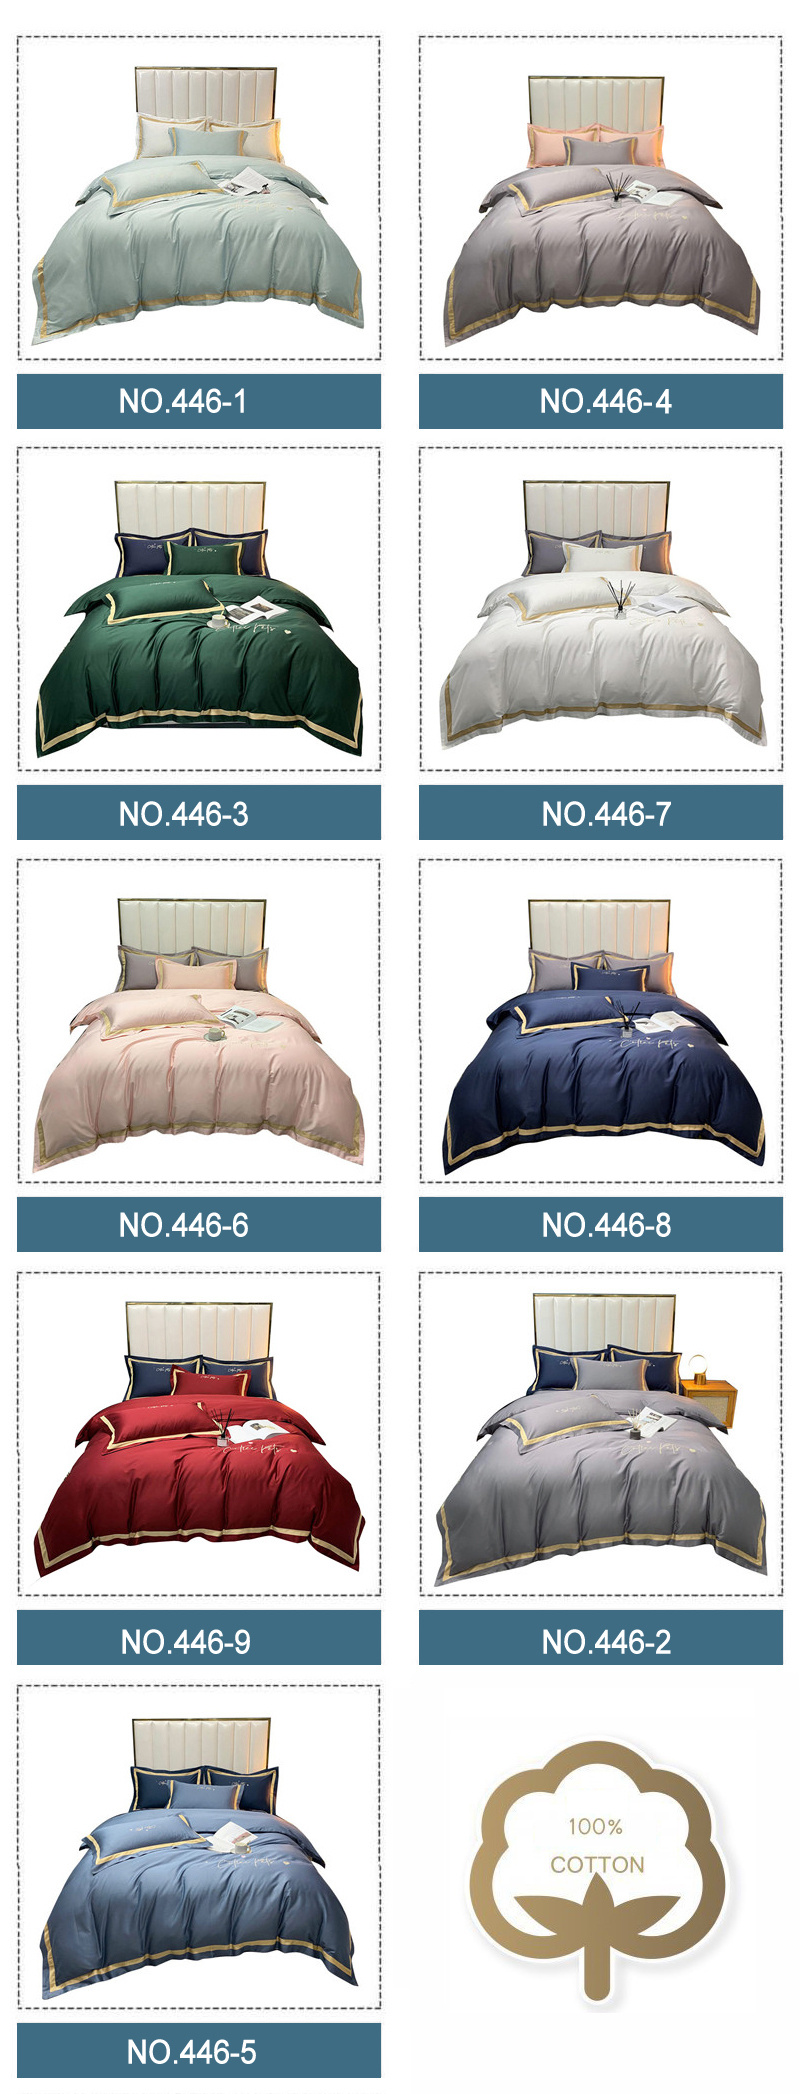 Deluxe Home Textile Sleep Cooler 100% Long Staple Cotton Bedding Lightskyblue 3PCS